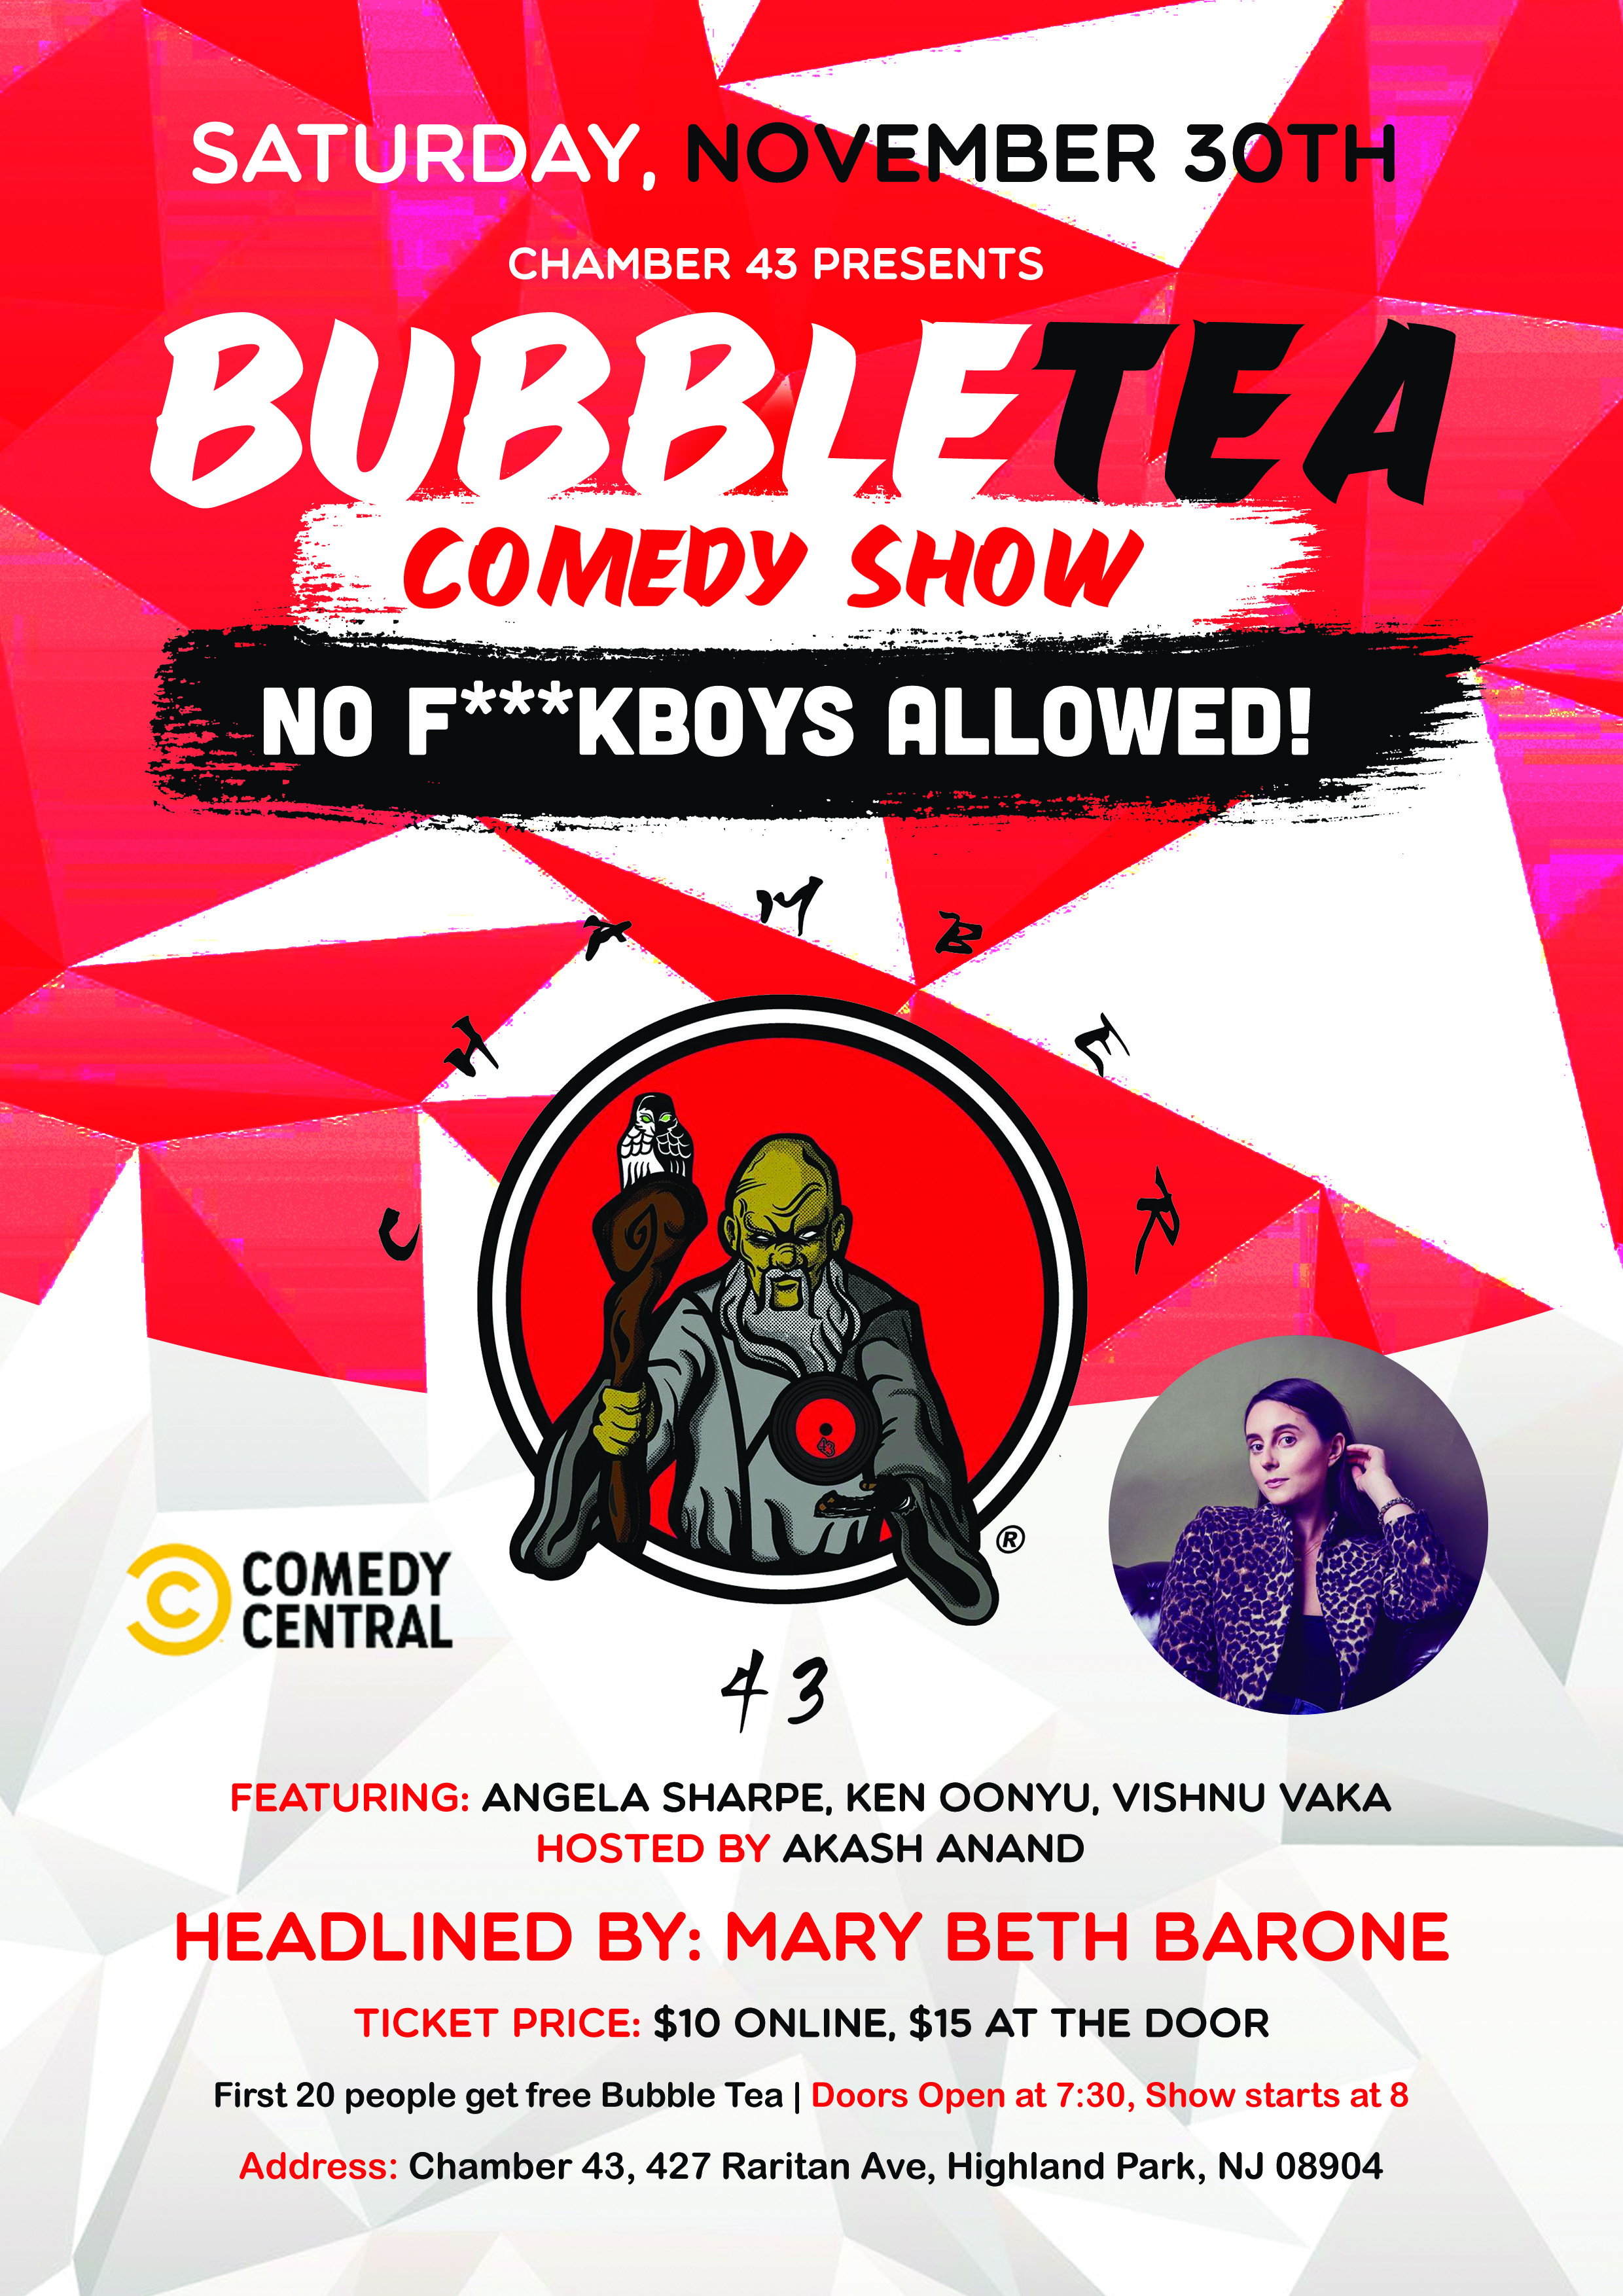 Bubble Tea Comedy Show: No F***Boys Allowed